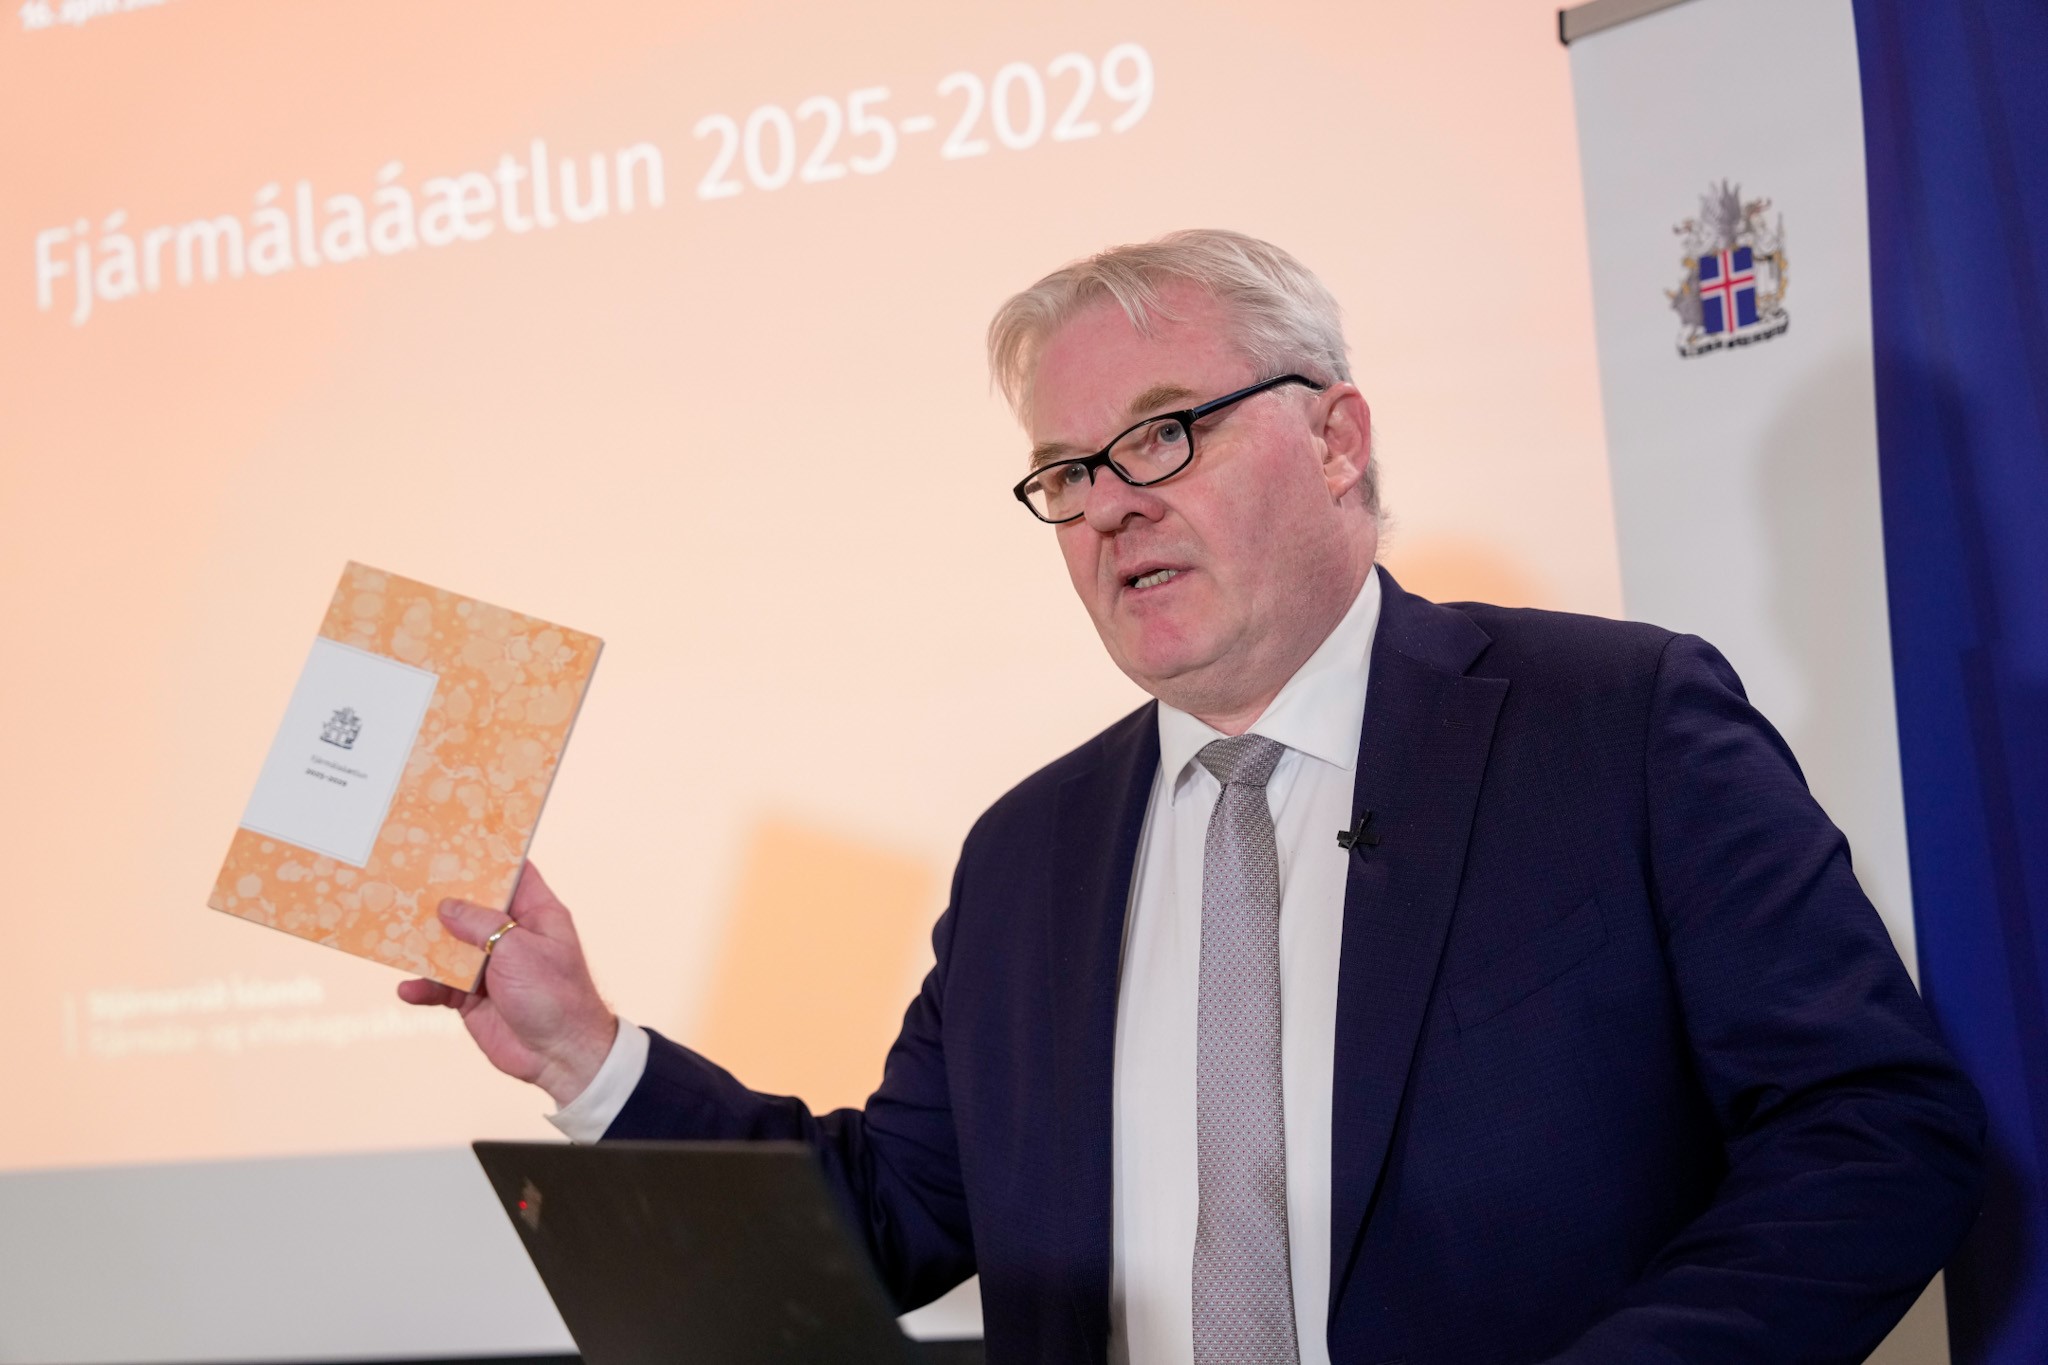 Sigurður Ingi Jóhannsson, Minister of Finance and Economic Affairs presents the five year fiscal plan. - mynd